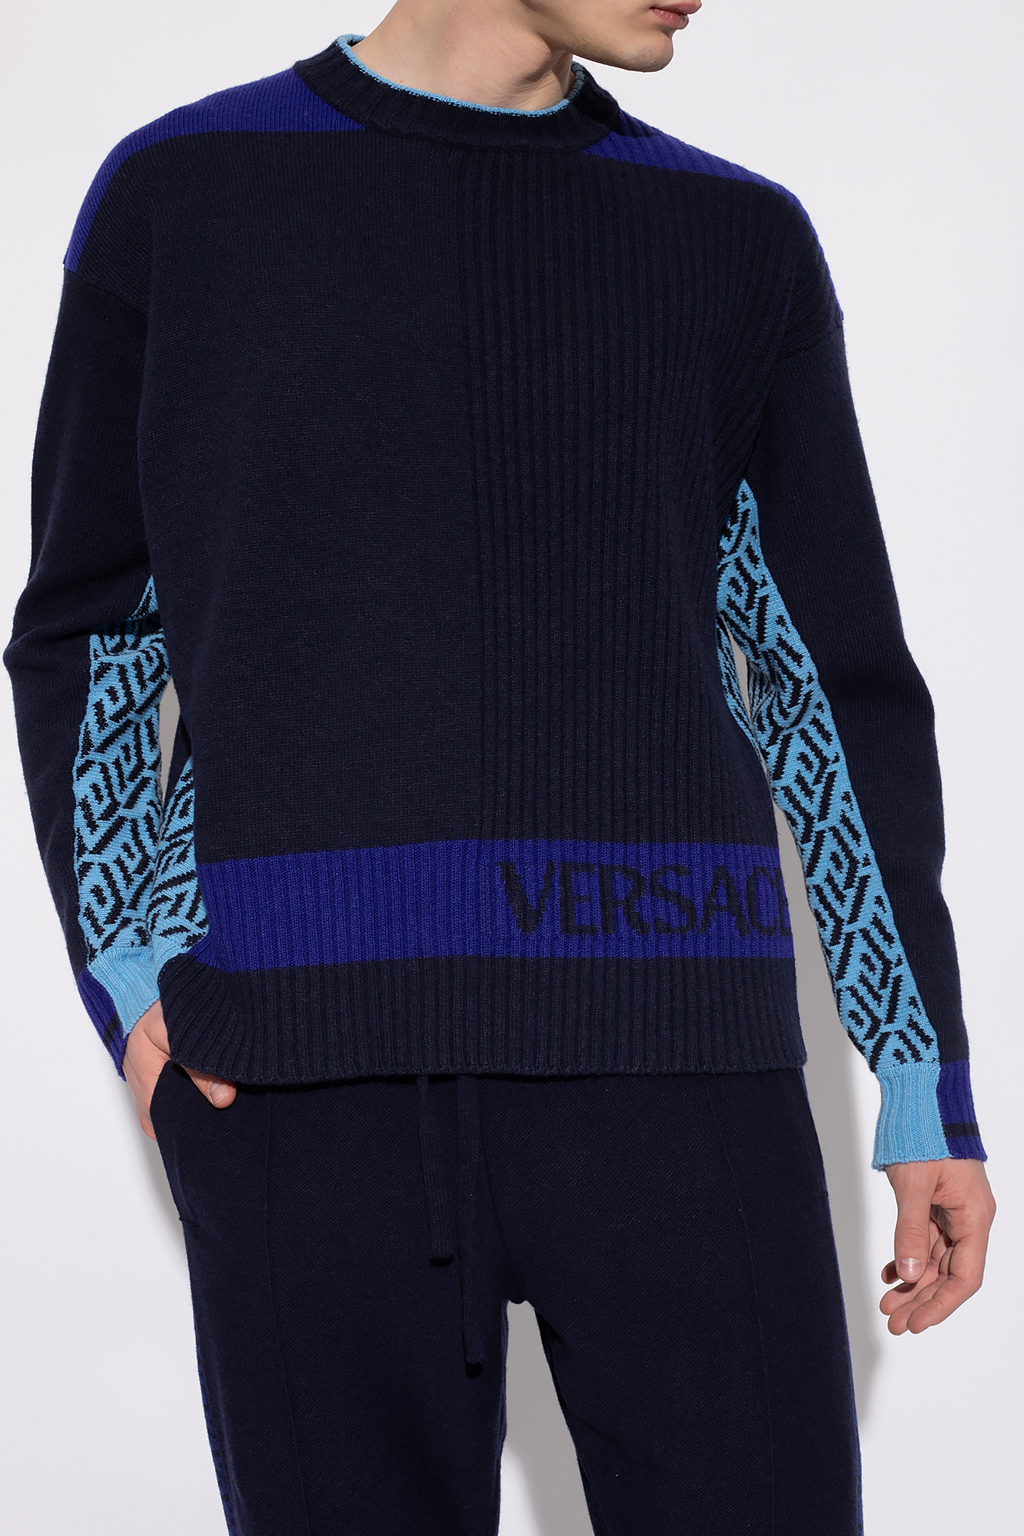 Versace Emporio Armani classic plain shirt